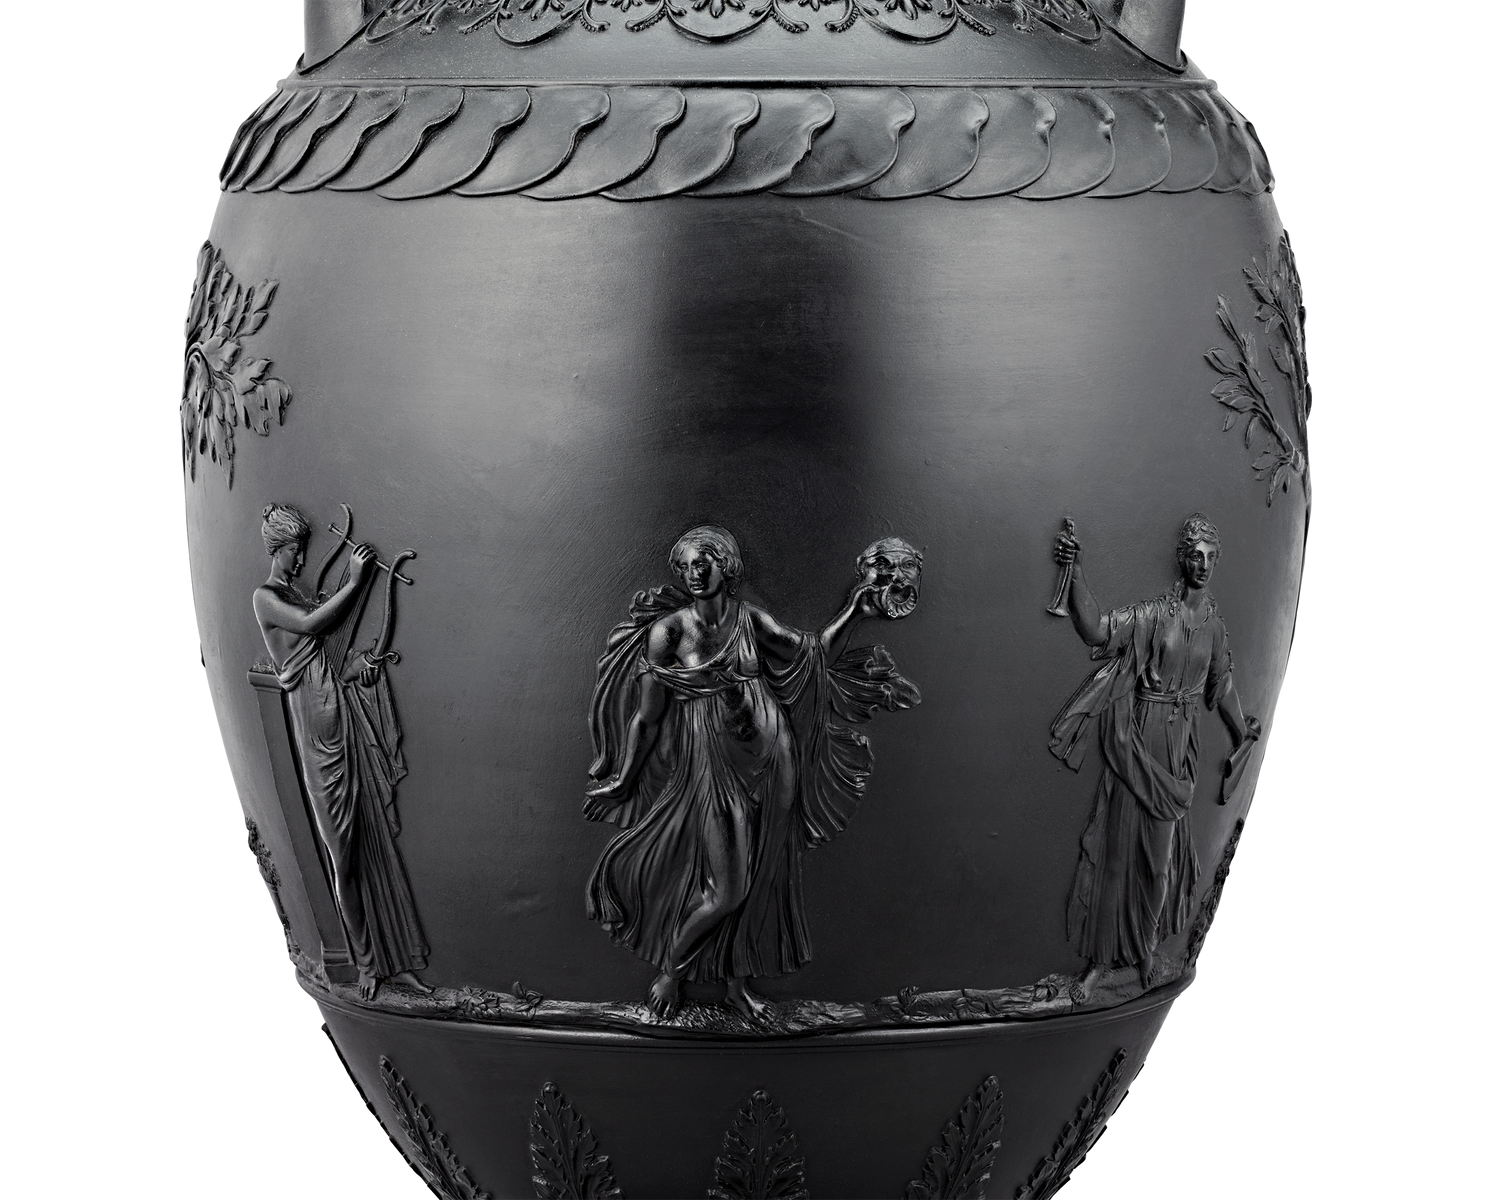 Wedgwood Black Basalt Two-Handled Vase